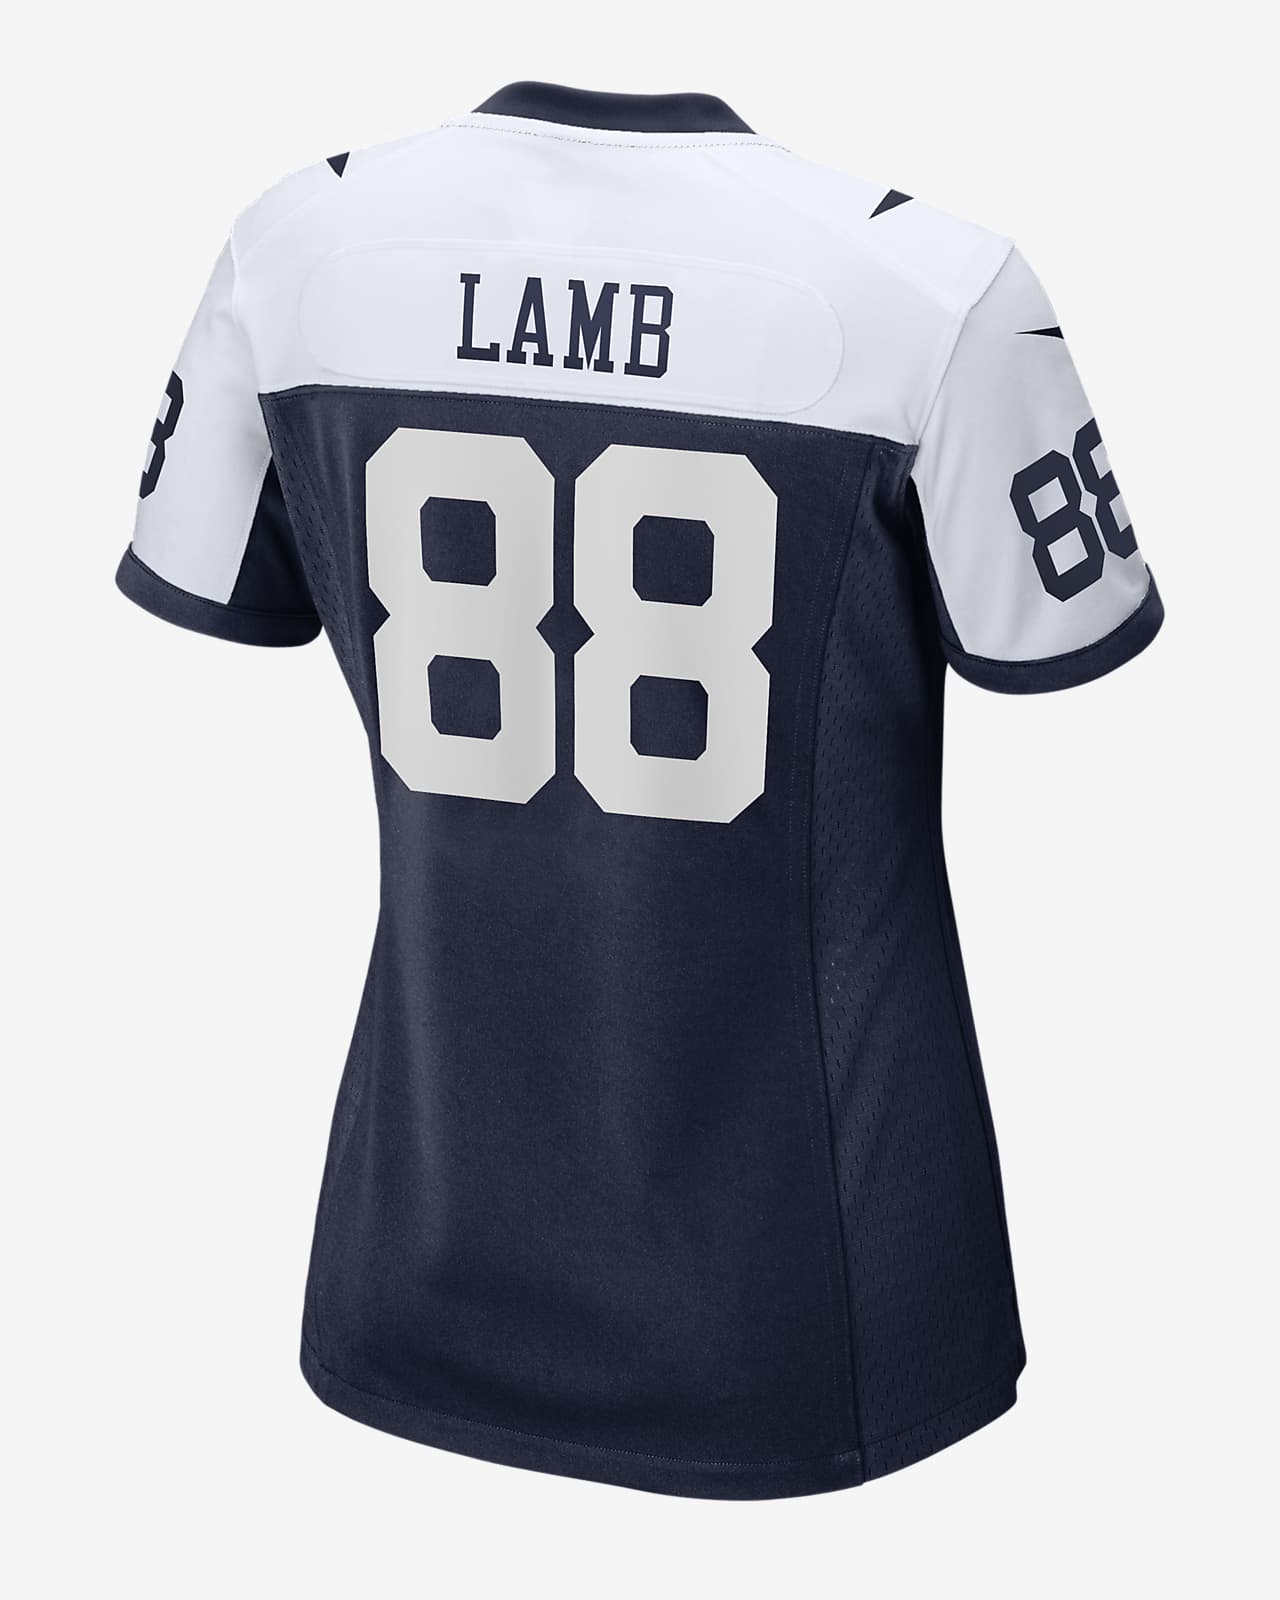 lamb 88 shirt